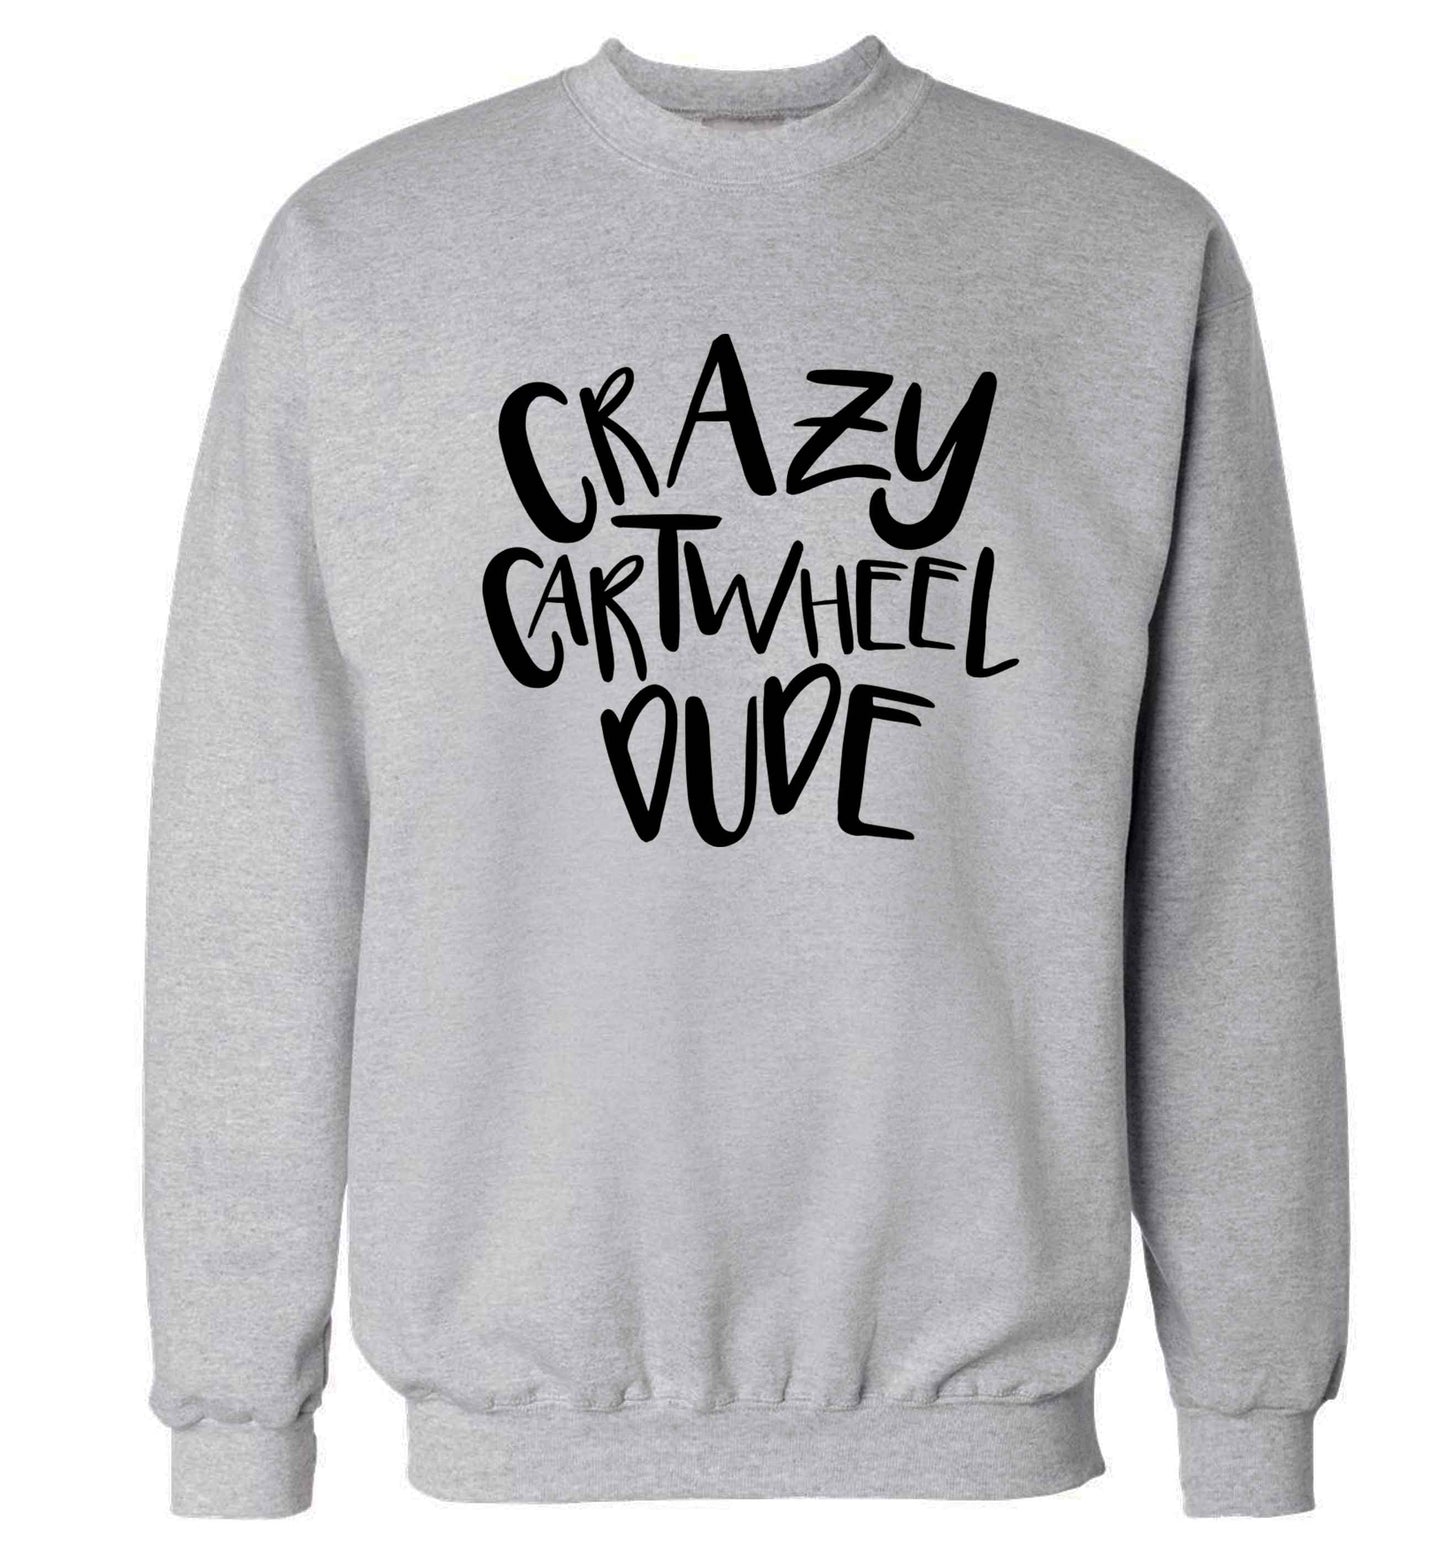 Crazy cartwheel dude Adult's unisex grey Sweater 2XL